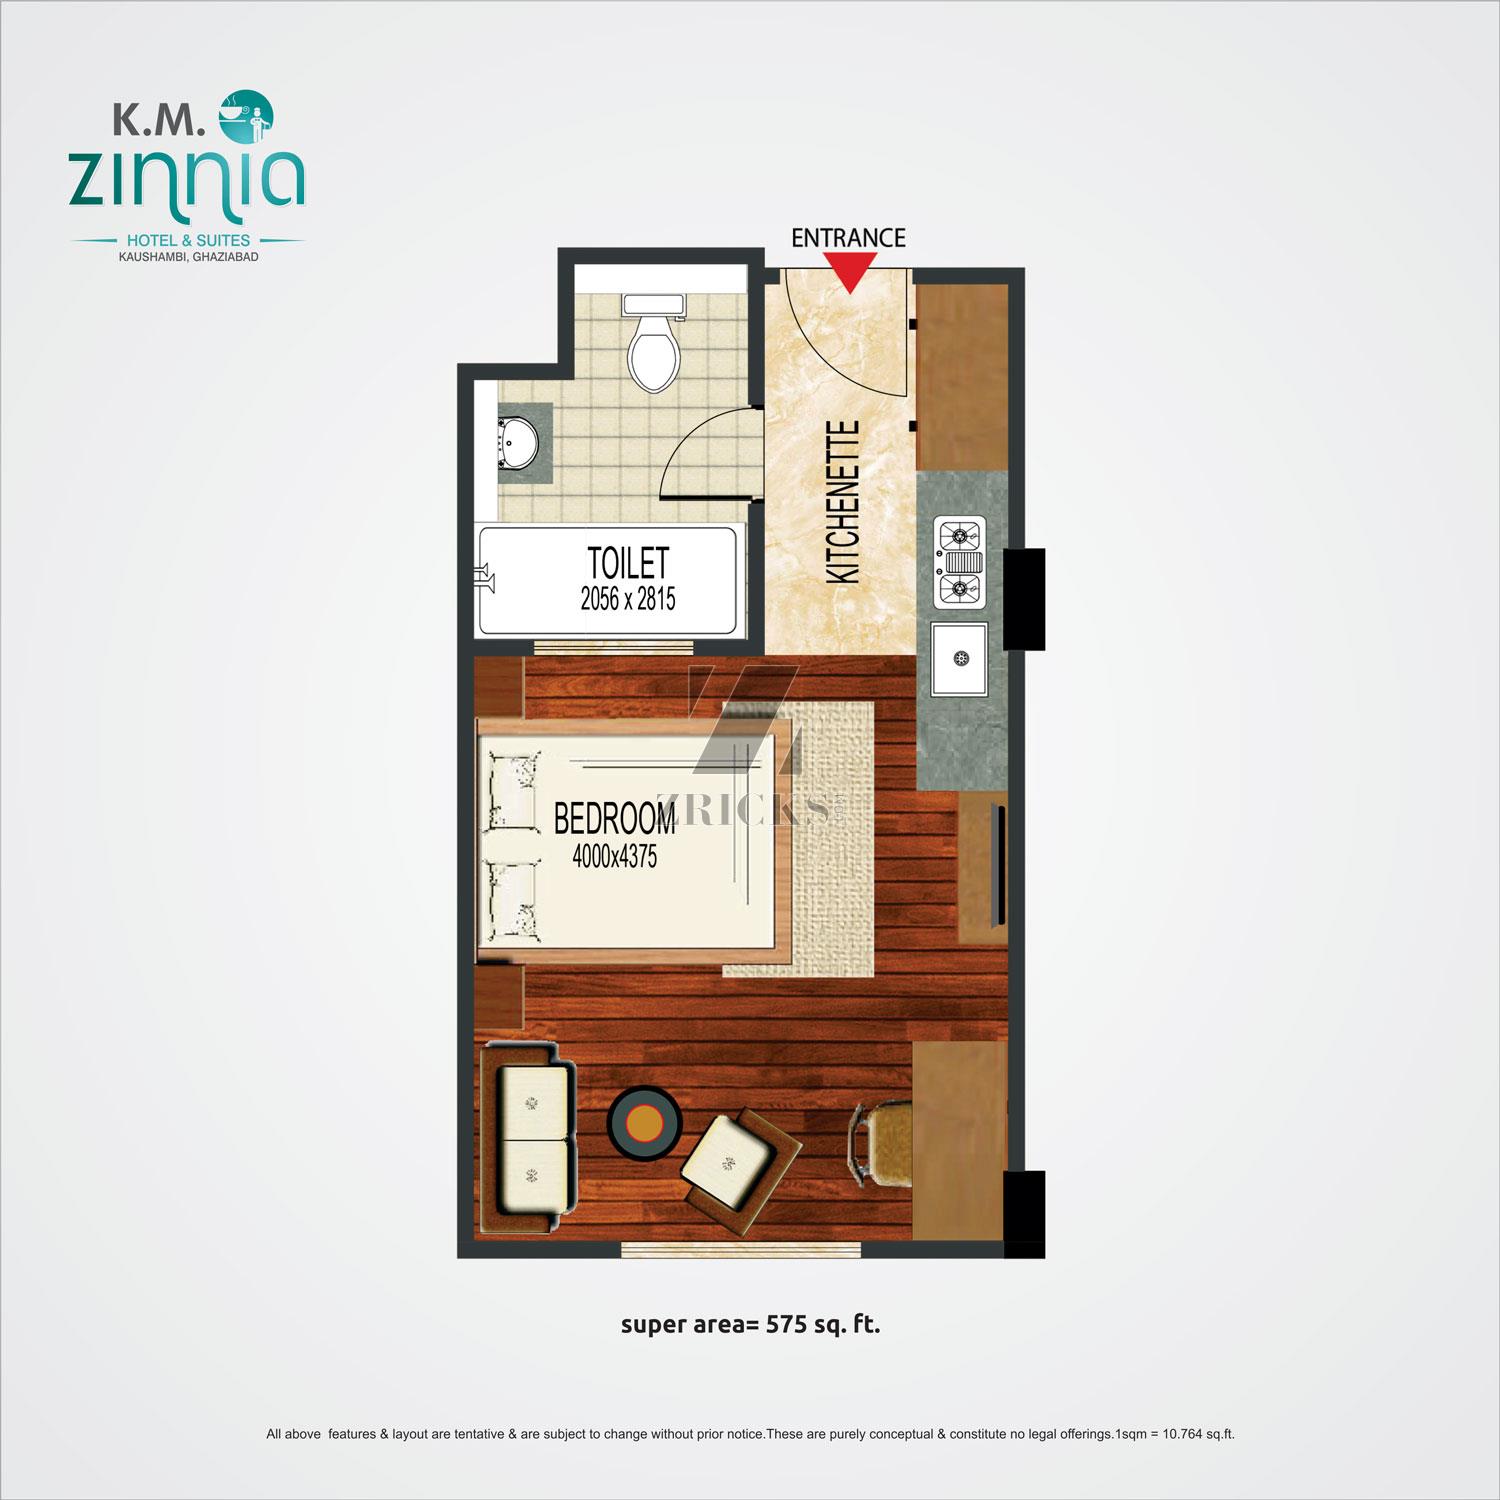 KM Zinnia Floor Plan